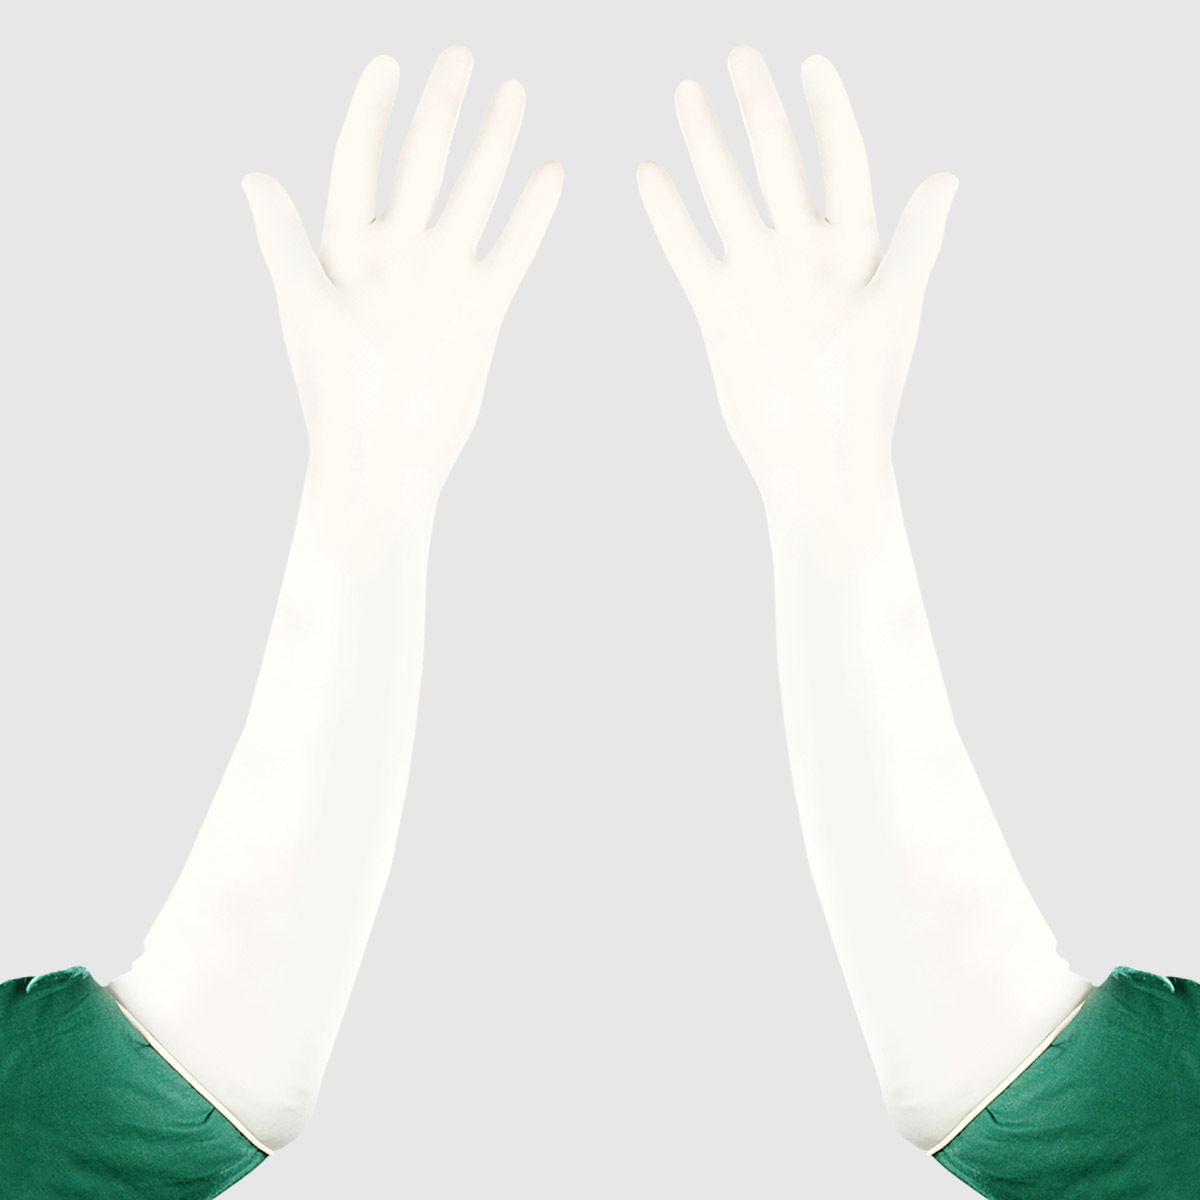 Long Sleeve Glove